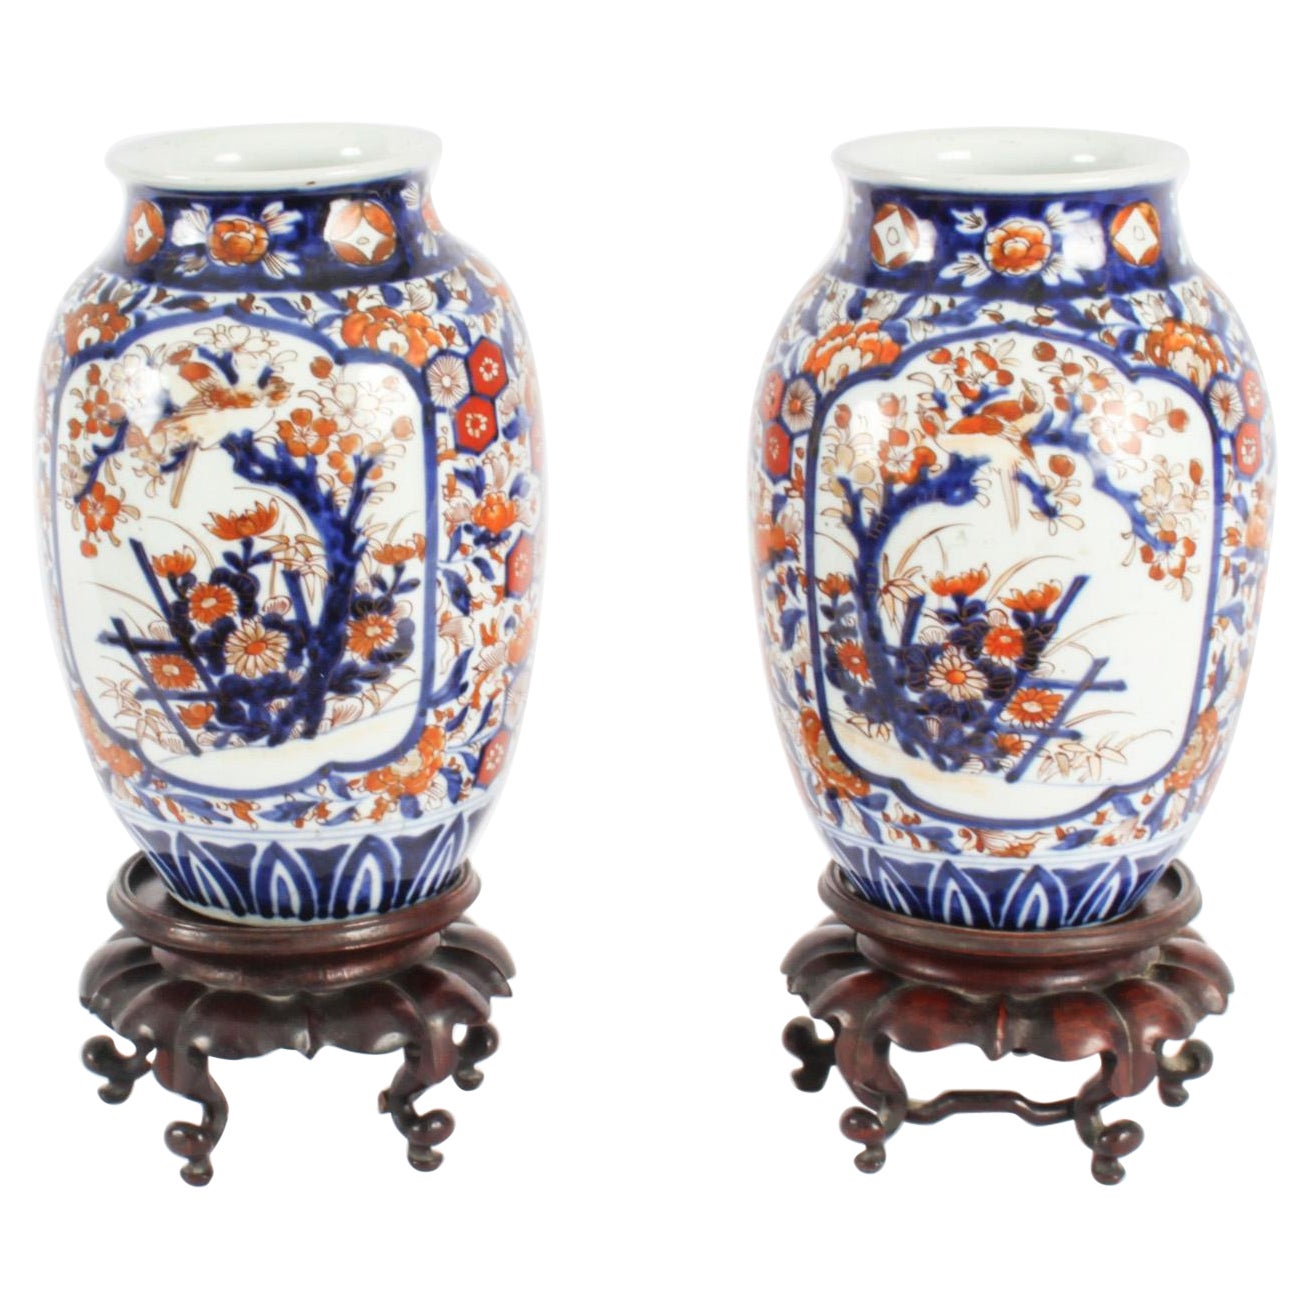 Antique Pair Japanese Imari Porcelain Vases on Stands 19th C